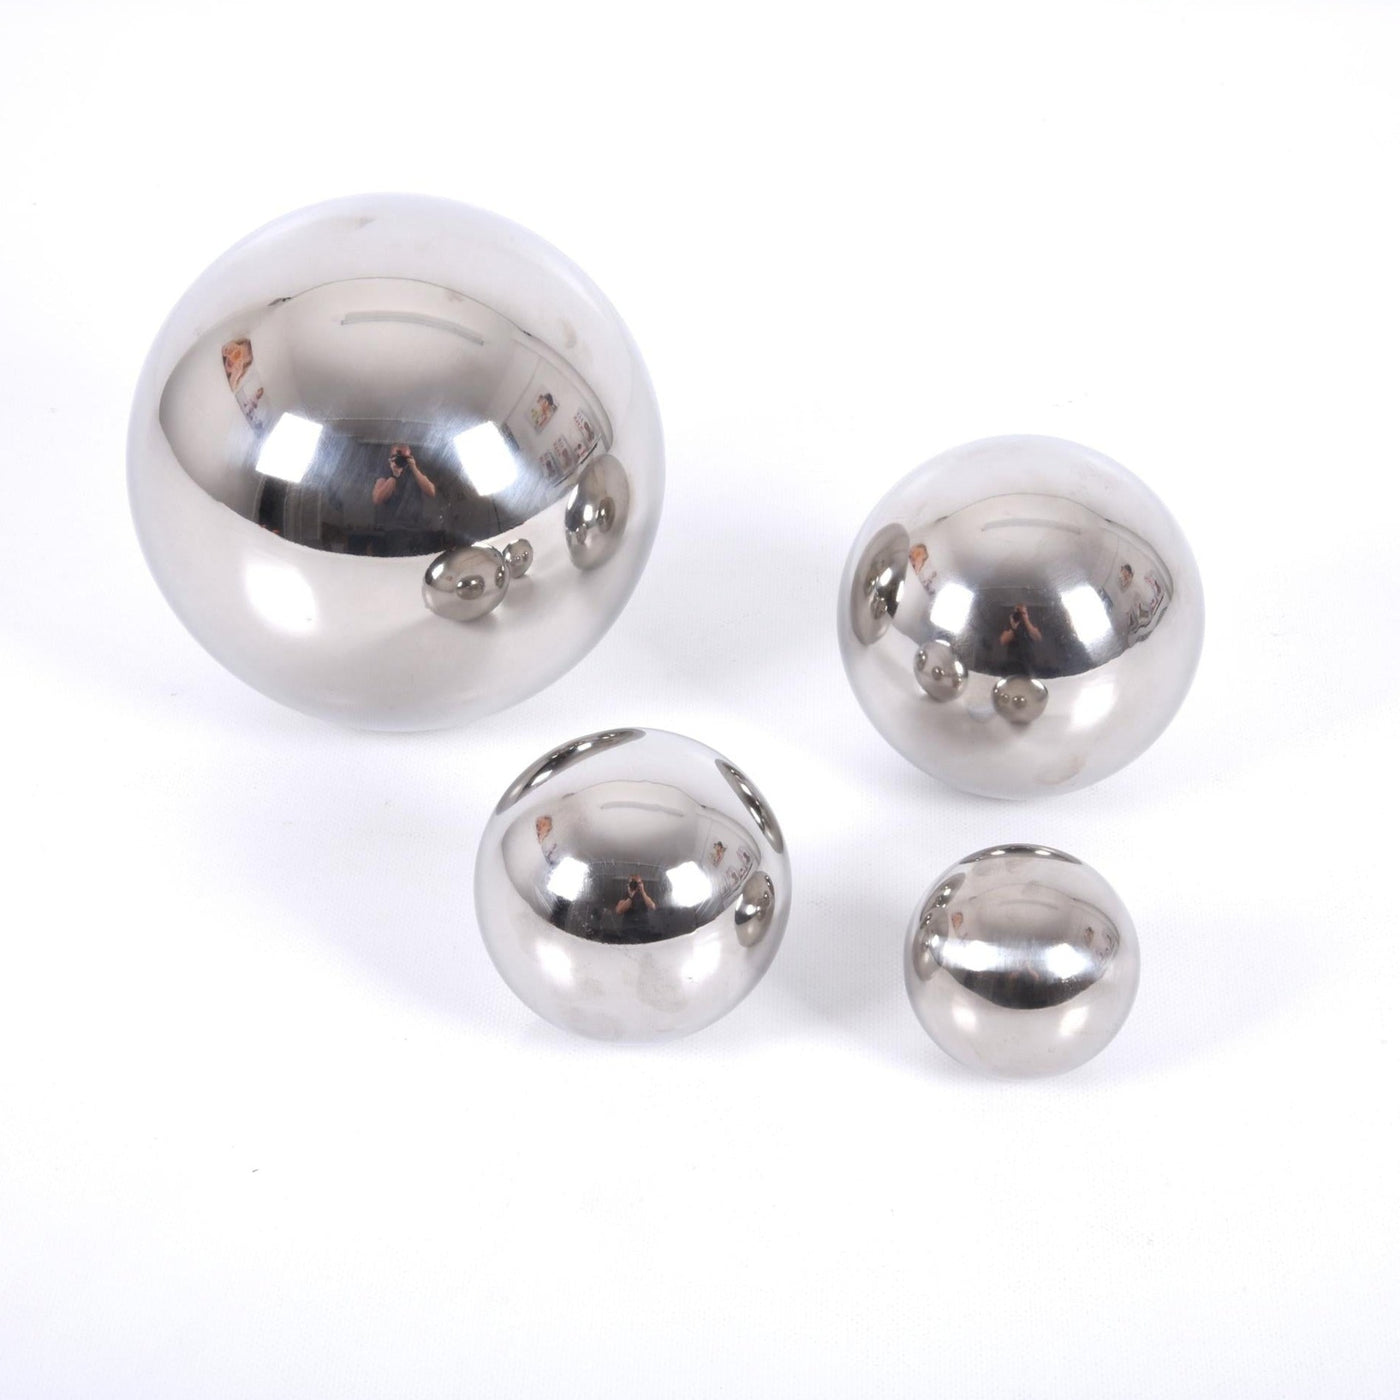 TickIT Sensory Reflective Silver Balls